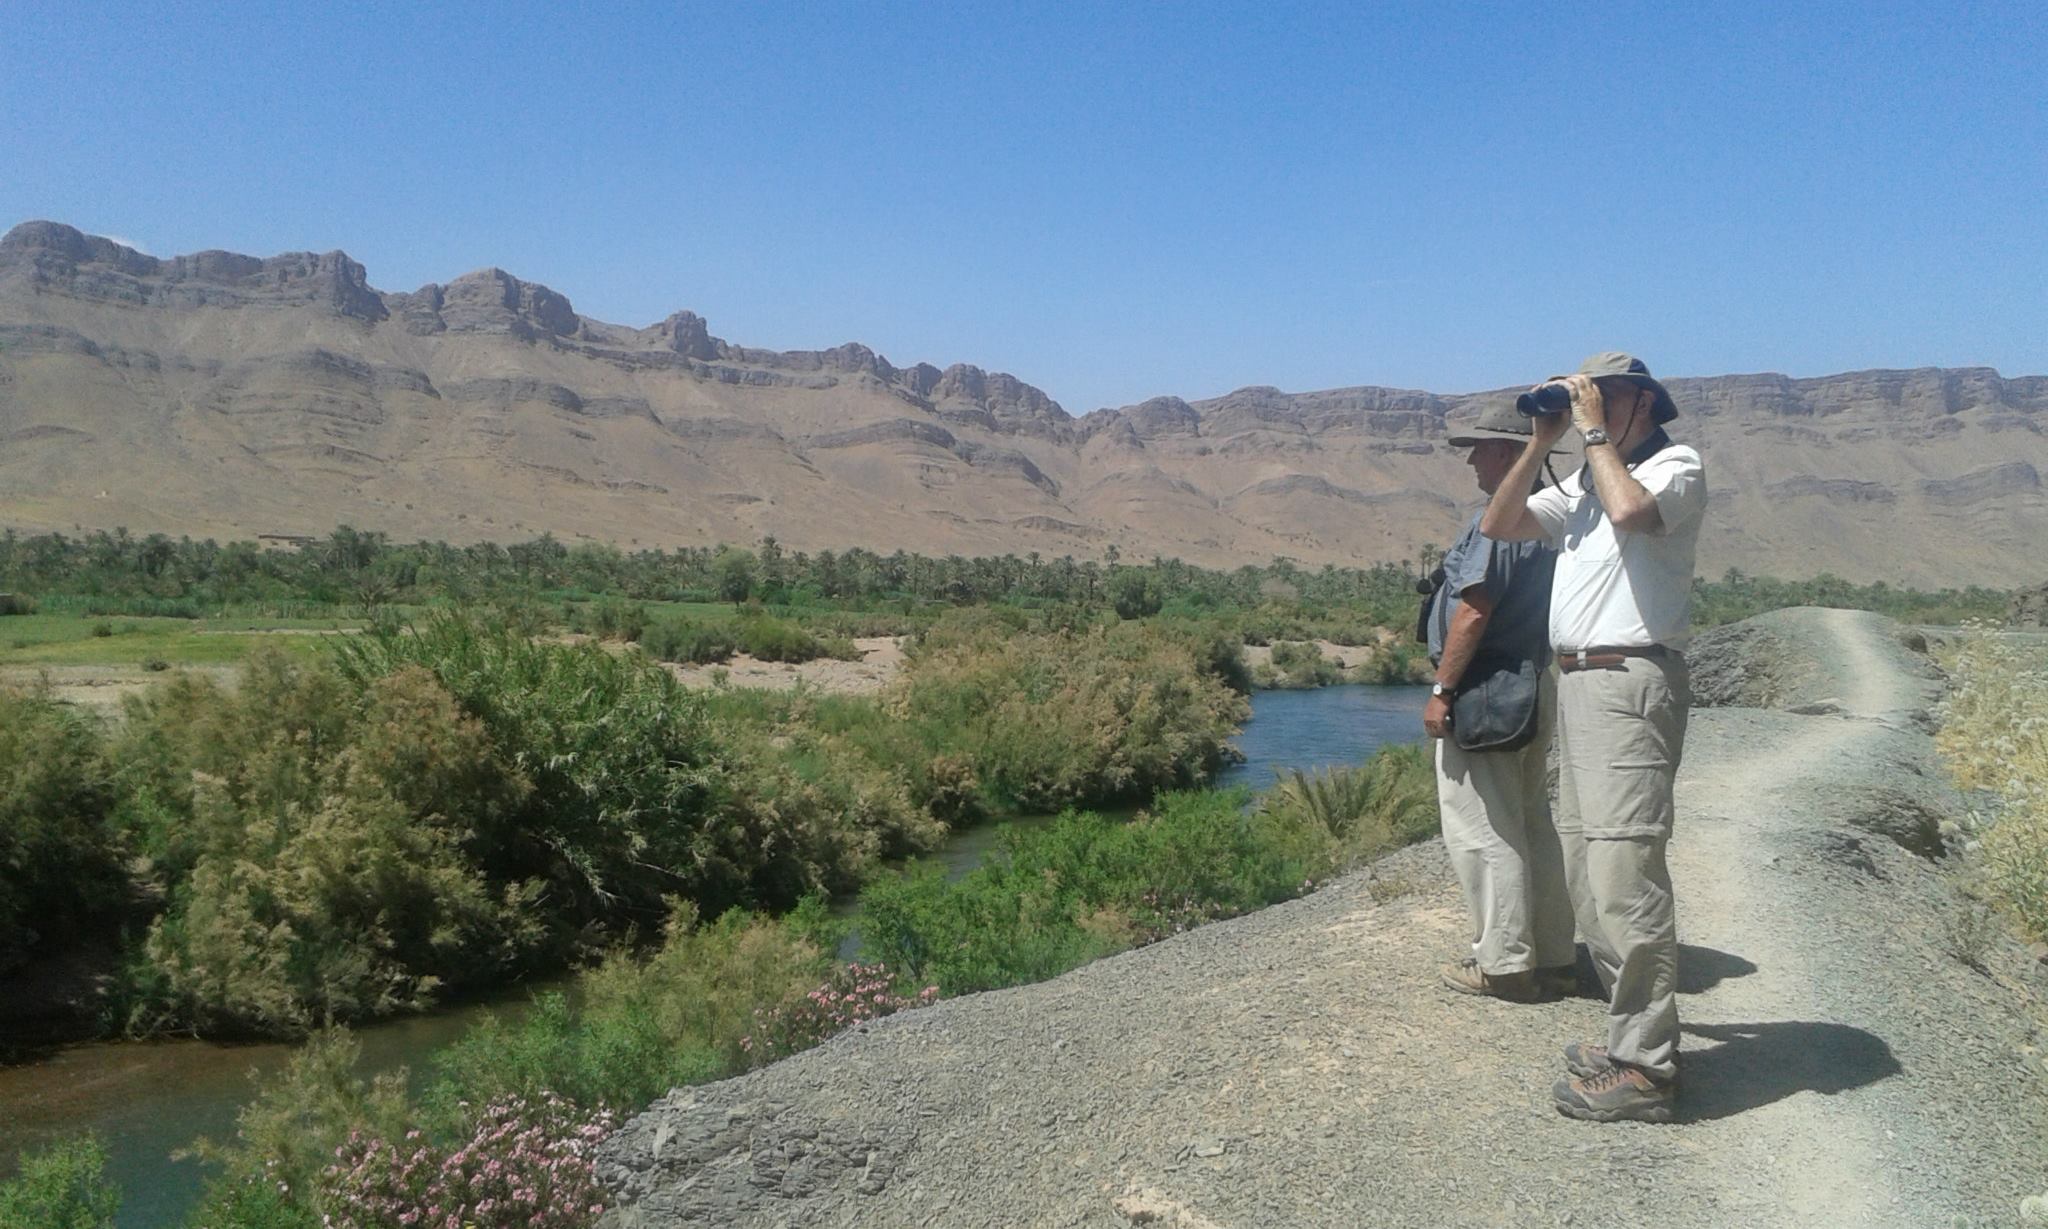 Marrakesh Desert Tour Package: Atlas valleys, Kasbah & Camels 4-days